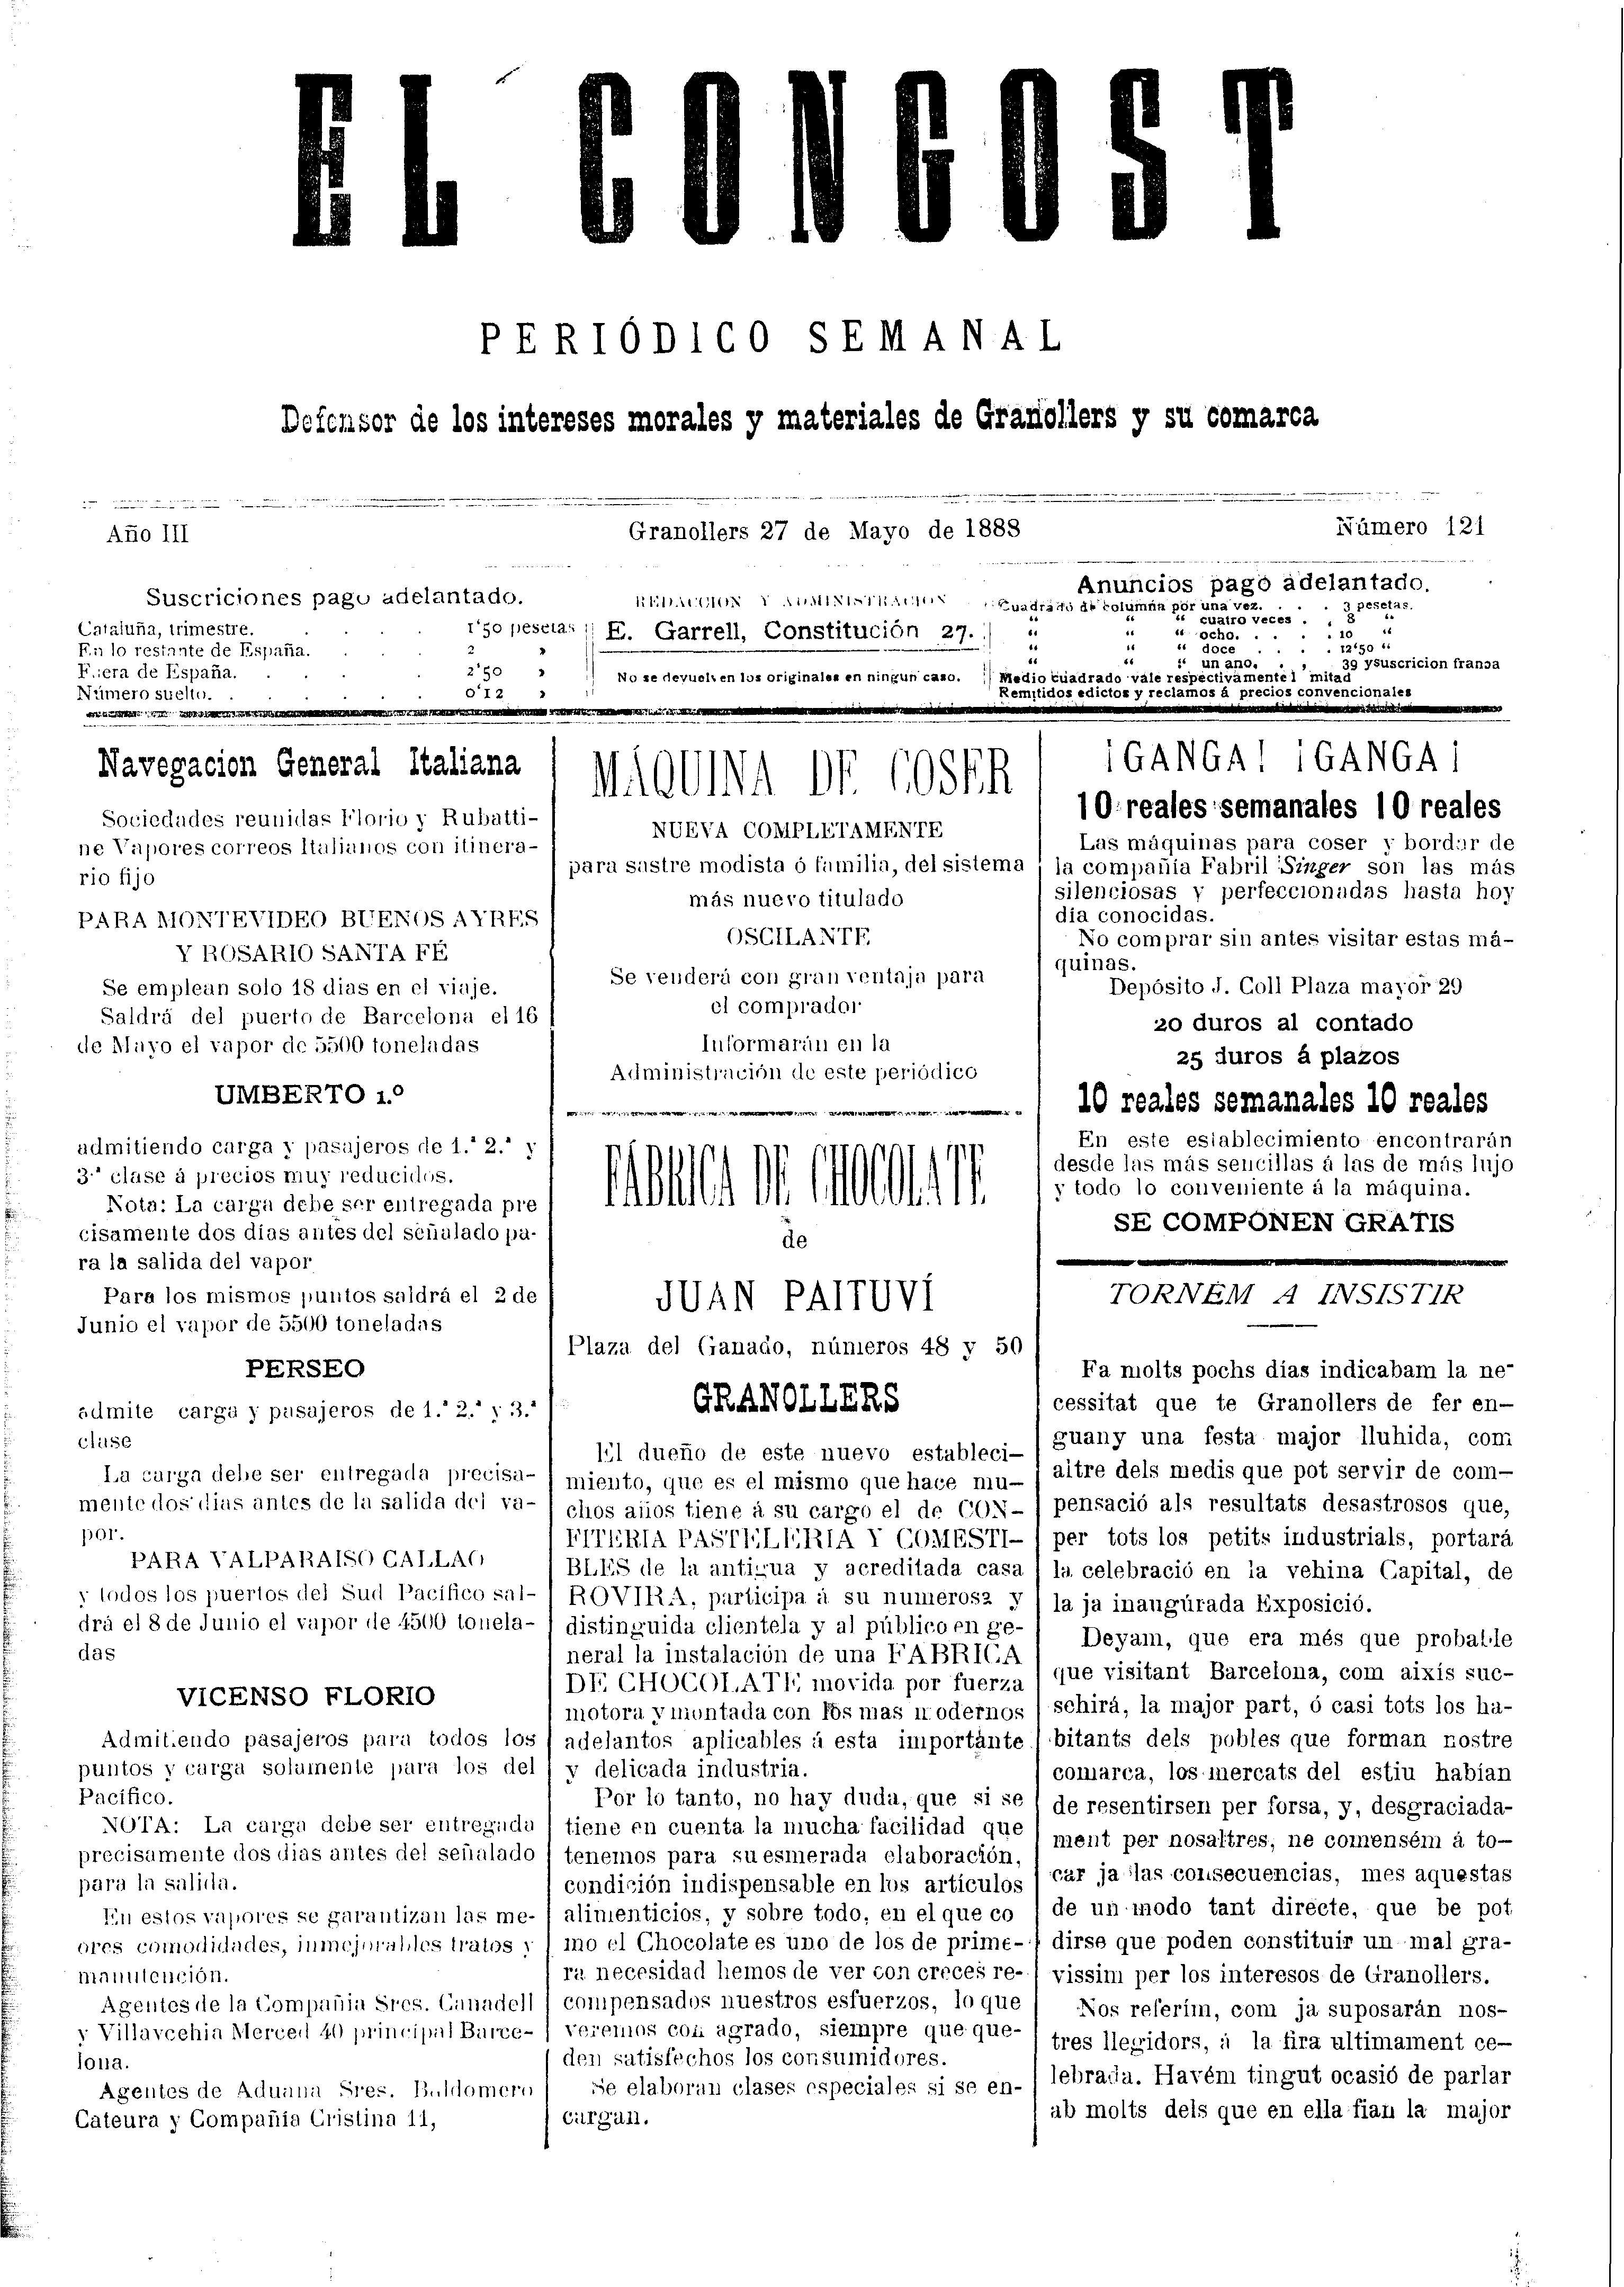 El Congost, 27/5/1888 [Ejemplar]